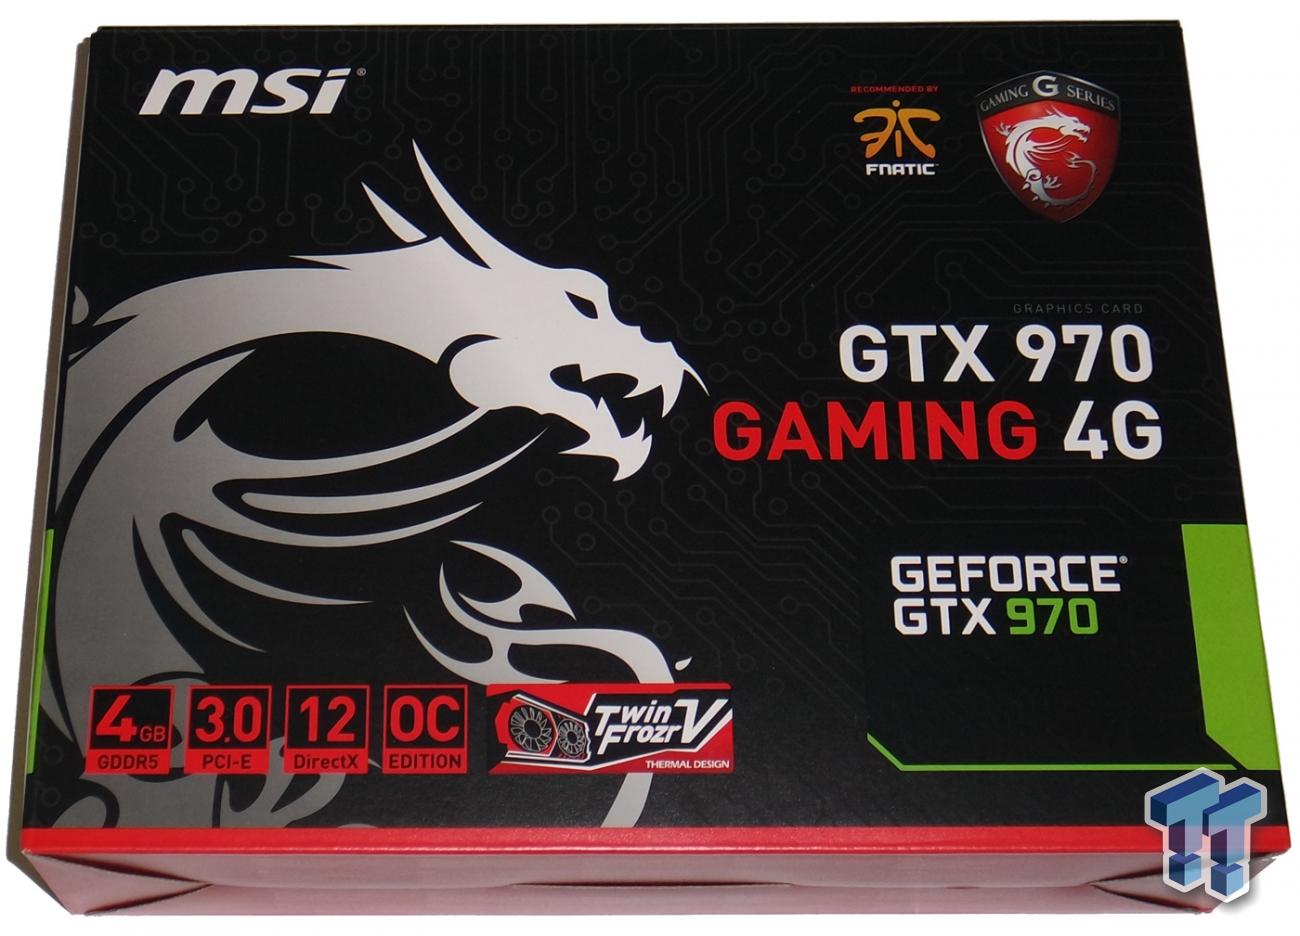 MSI GTX 970 4gb. MSI 970 4gb Gaming. MSI GEFORCE GTX 970 Gaming 4g. MSI 970 Gaming карта. Geforce 970 gaming